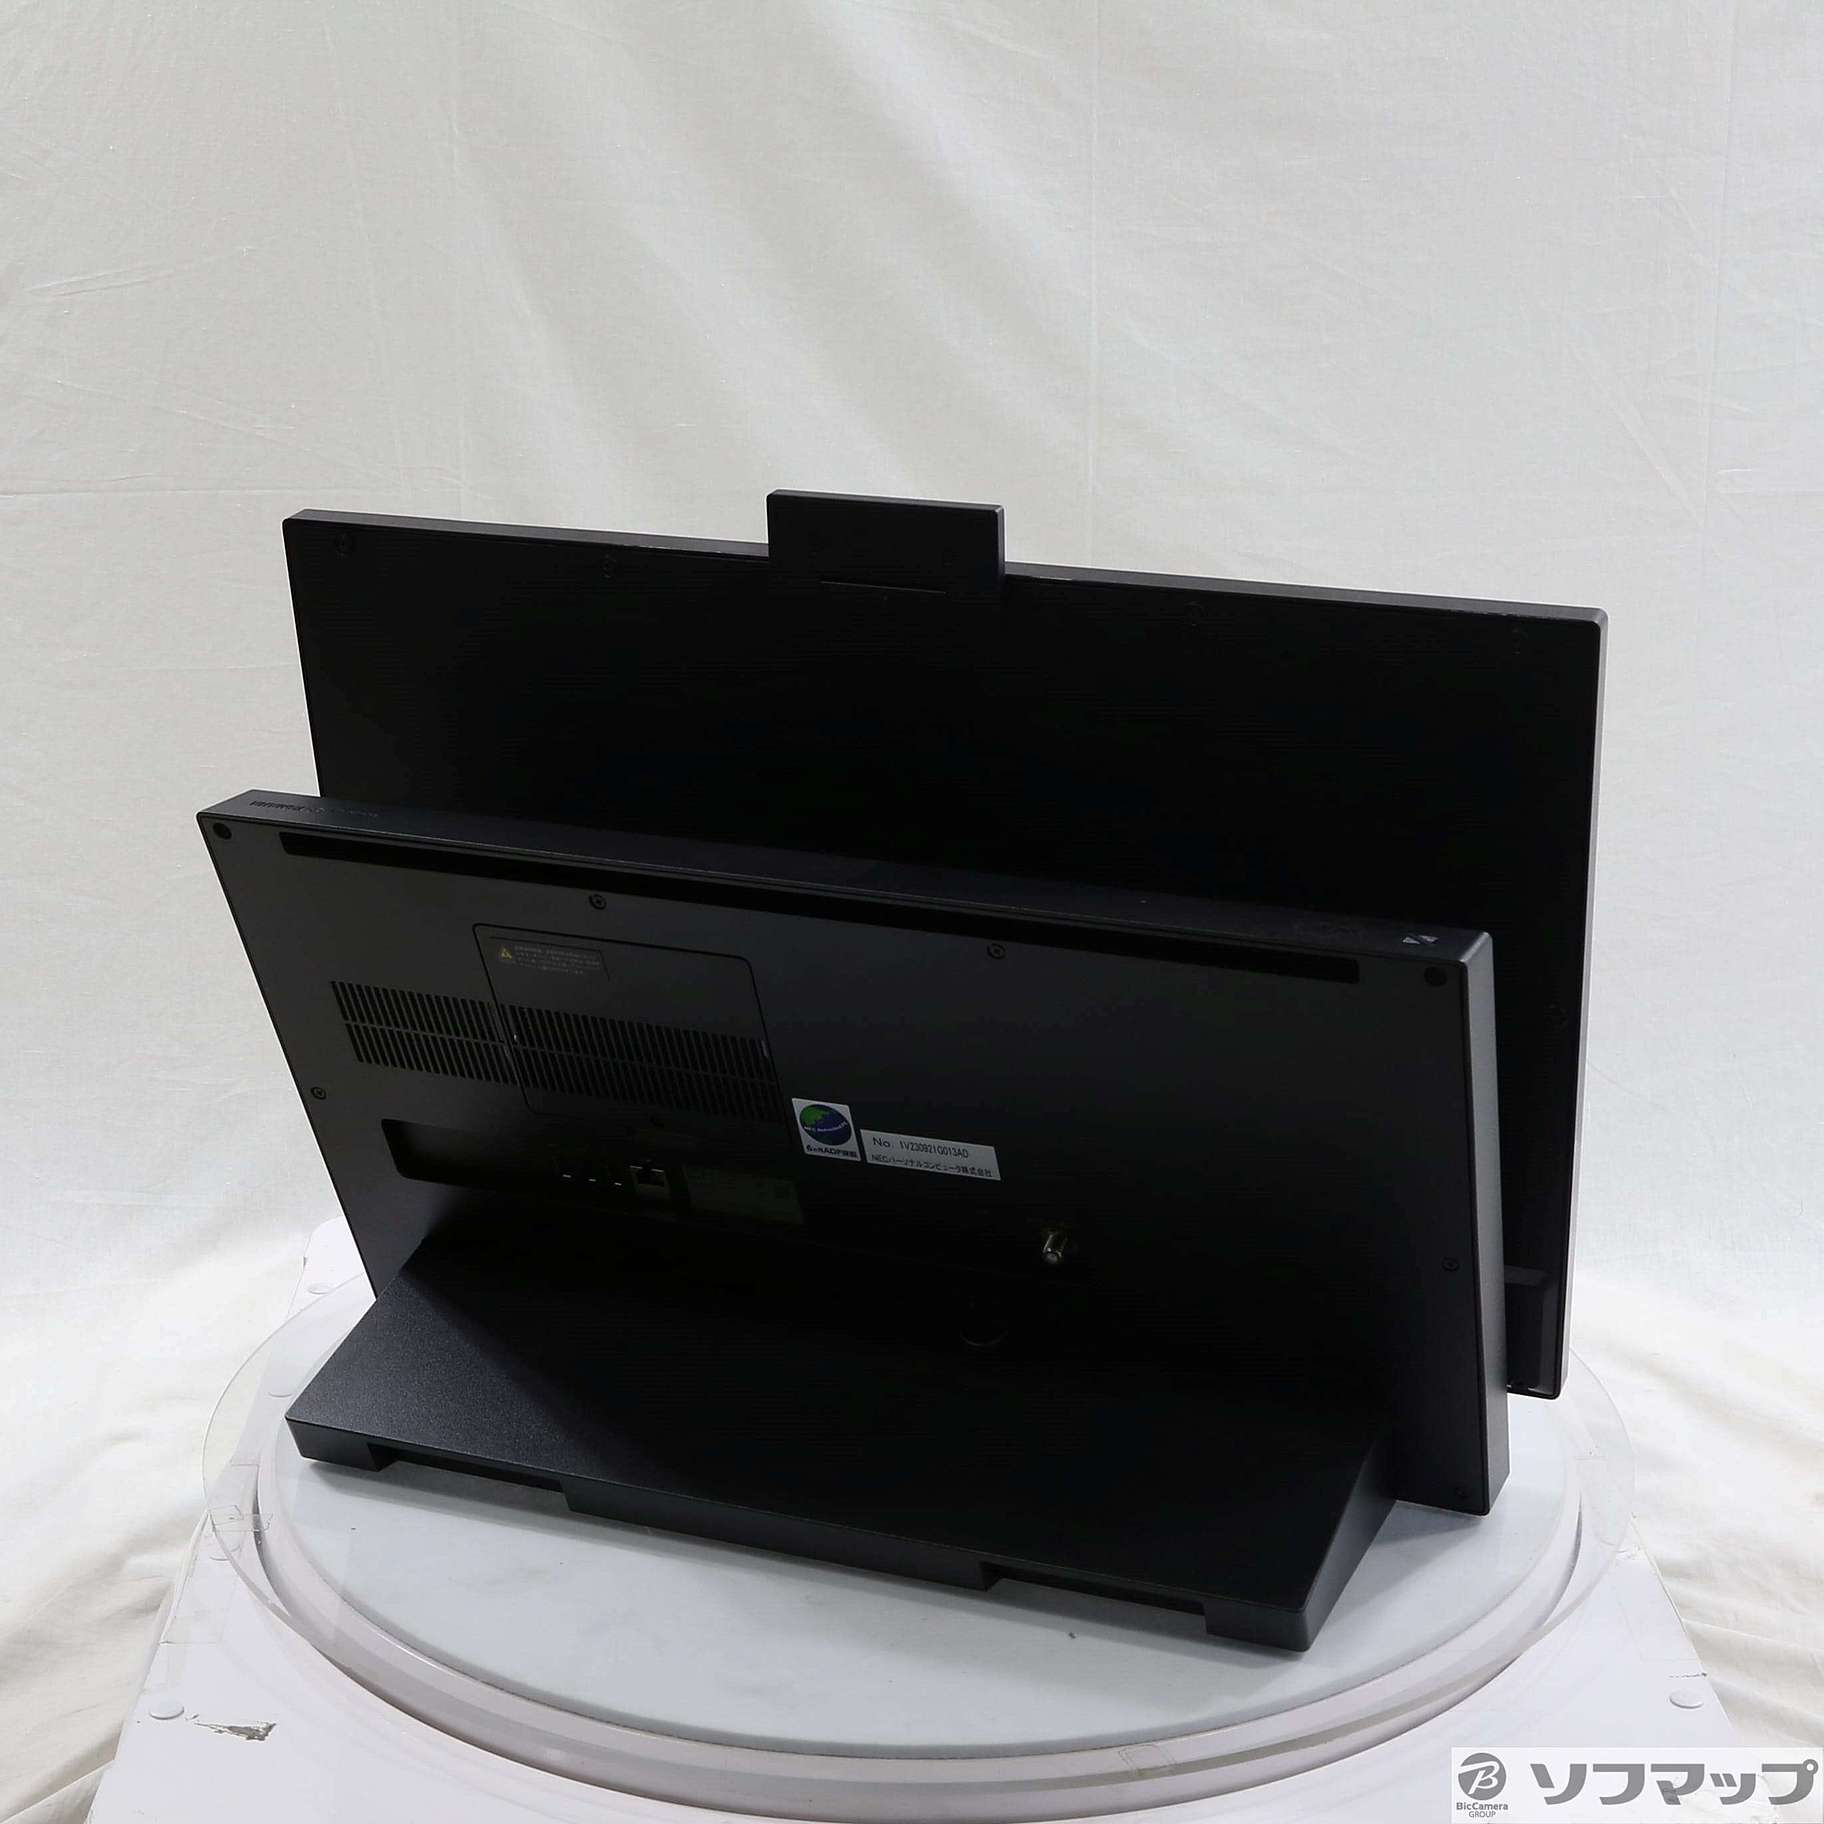 LAVIE Desk All-in-one PC-DA370MAB ファインブラック 〔NEC Refreshed PC〕 〔Windows 10〕  ≪メーカー保証あり≫